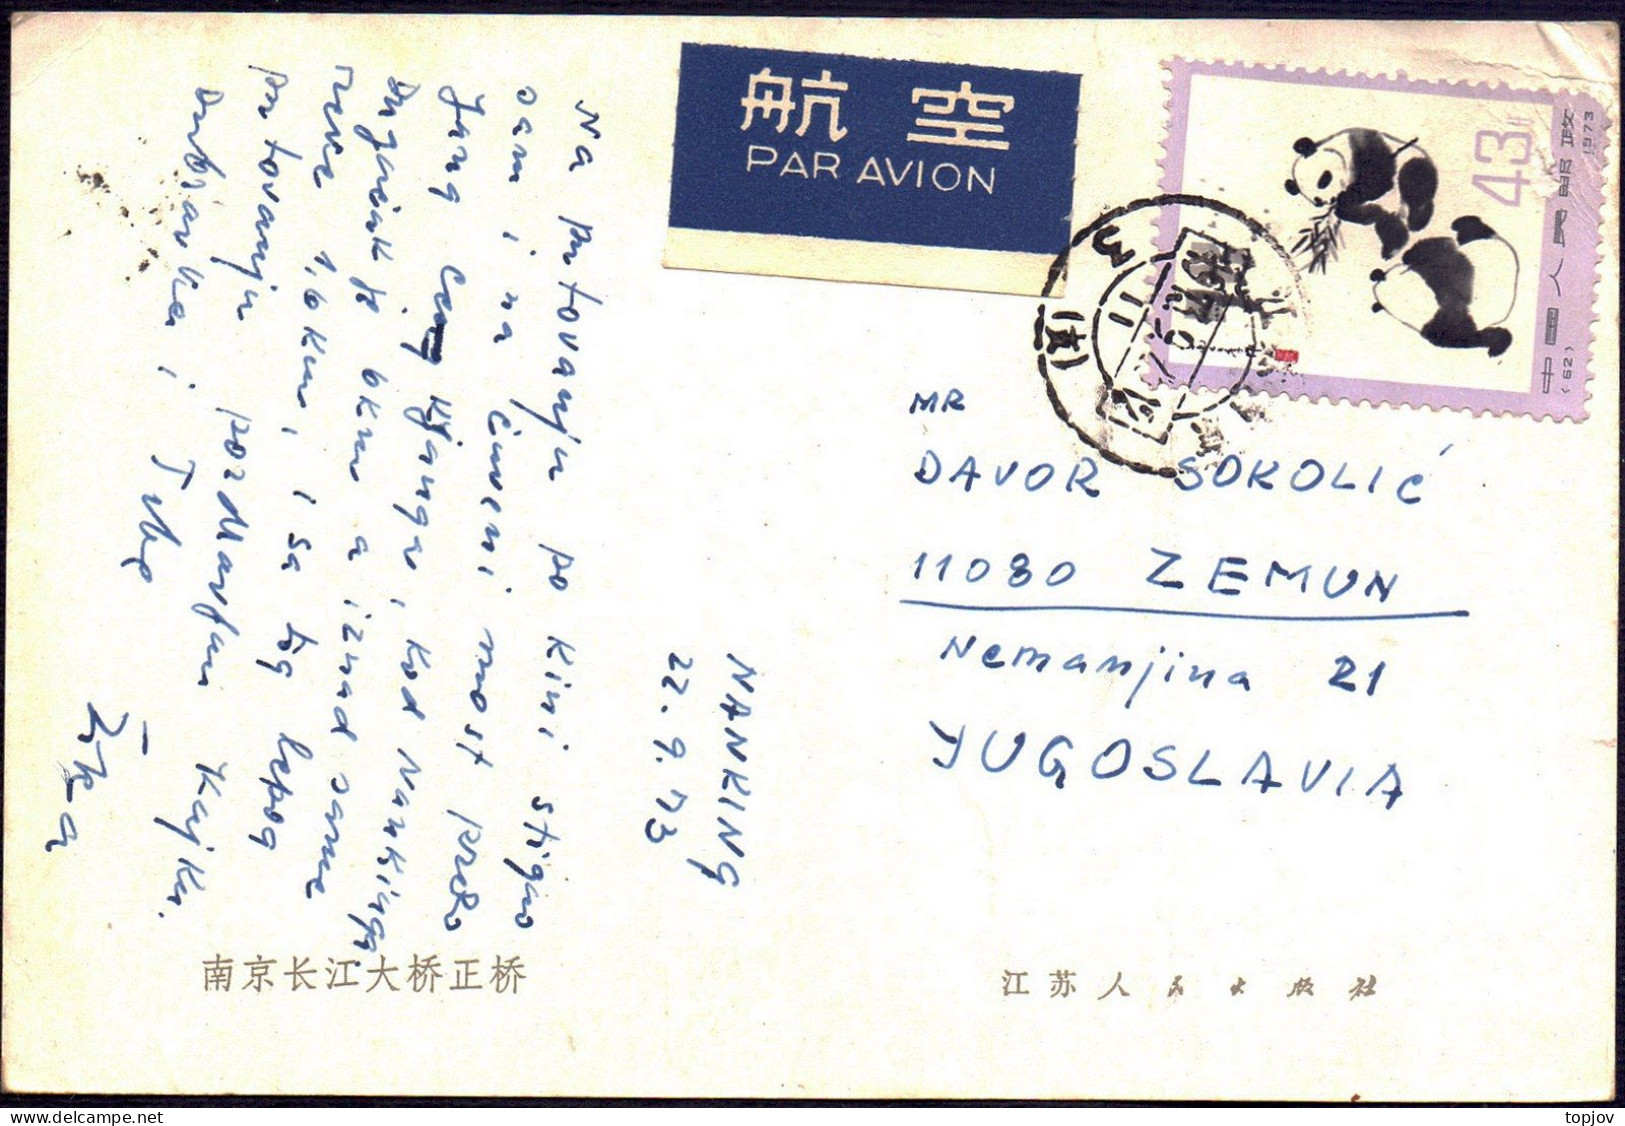 CHINA - KINA - GIANT PANDA On AIRMAIL - 1973 - Covers & Documents